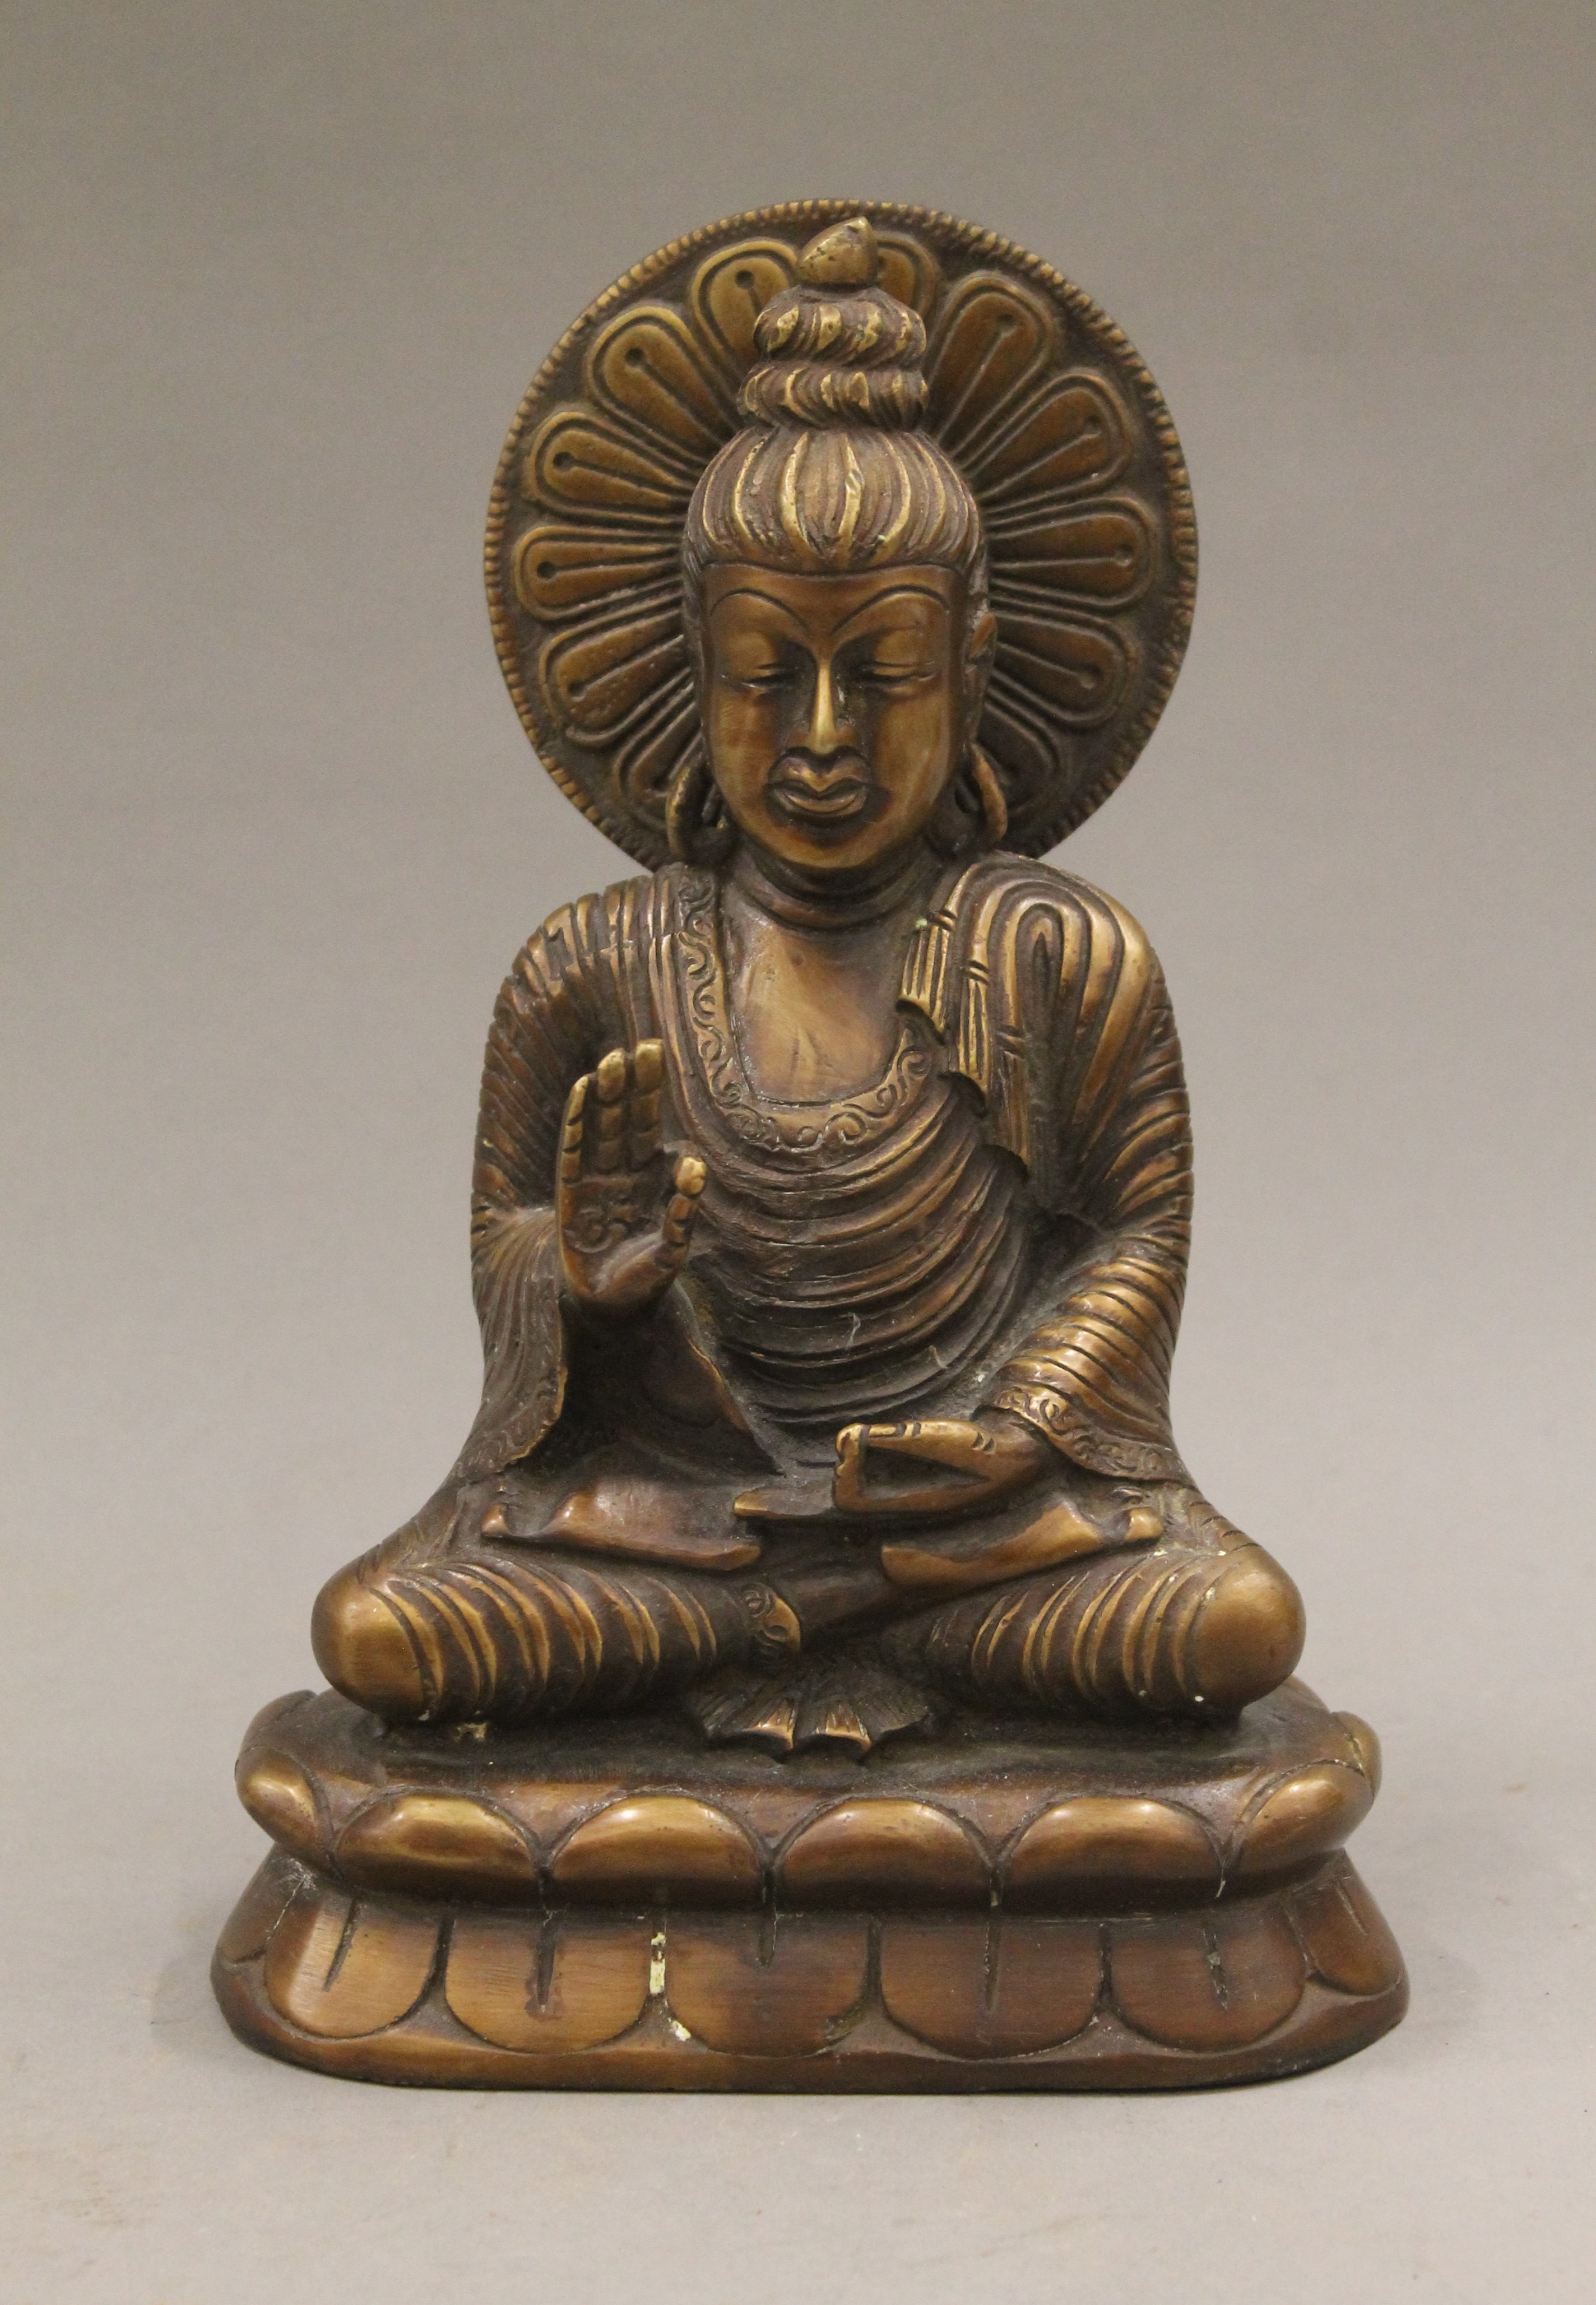 A bronze model of Buddha. 21 cm high.